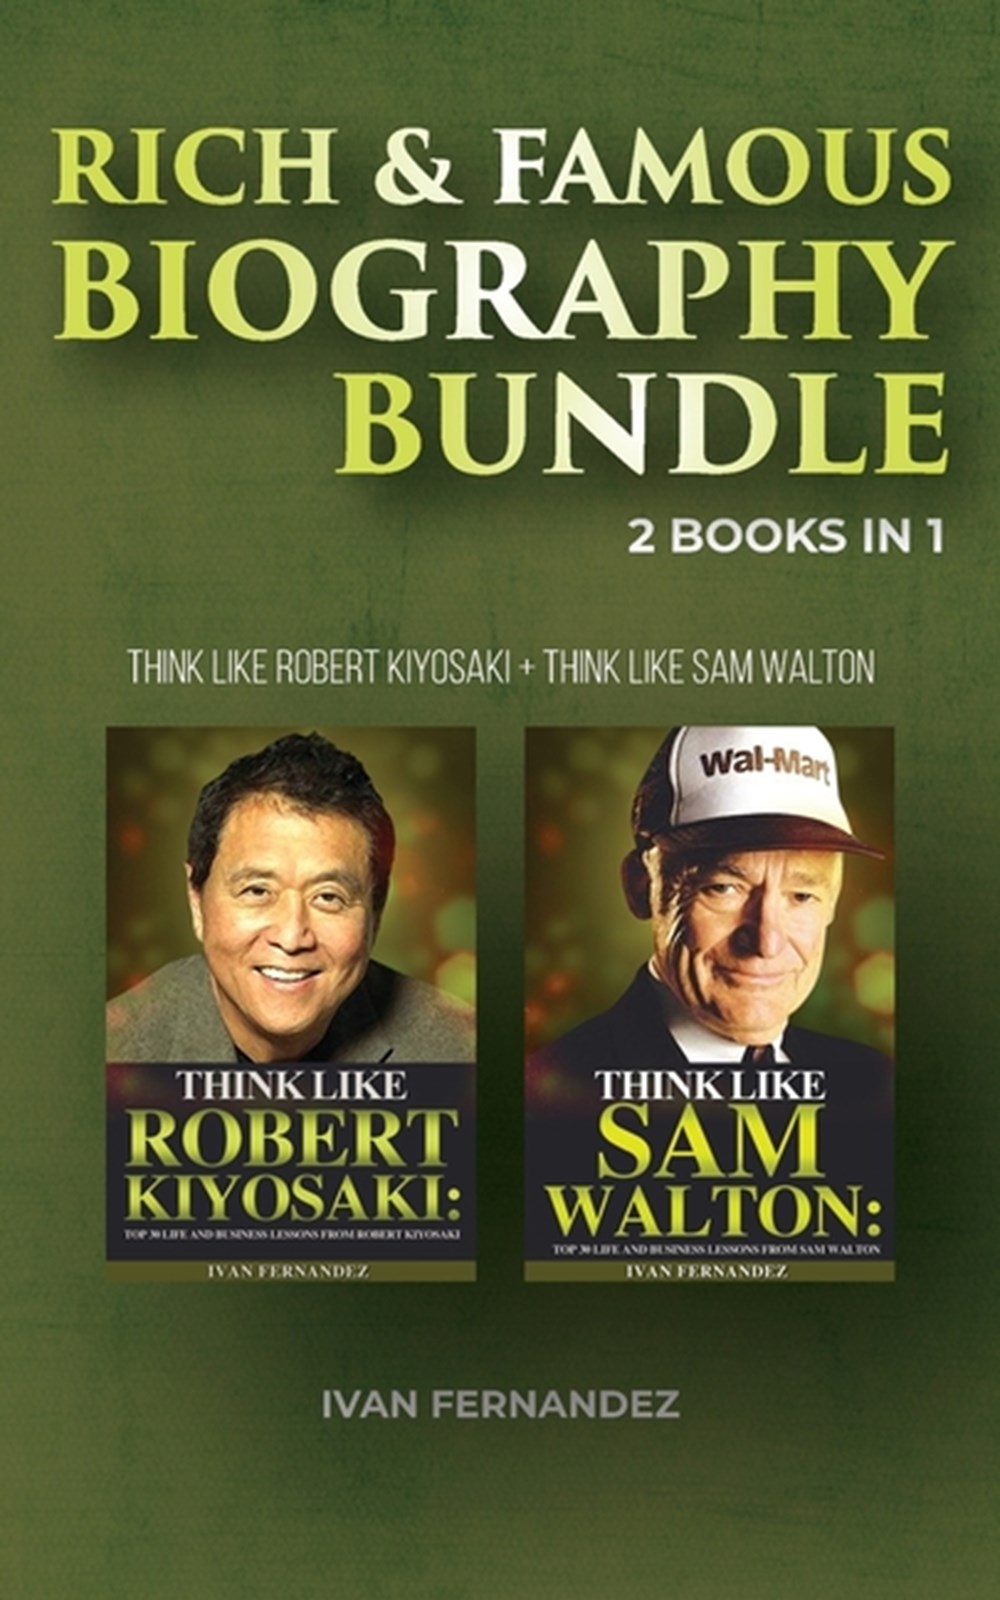 Rich & Famous Biography Bundle 2 Books in 1: Think Like Robert Kiyosaki + Think Like Sam Walton